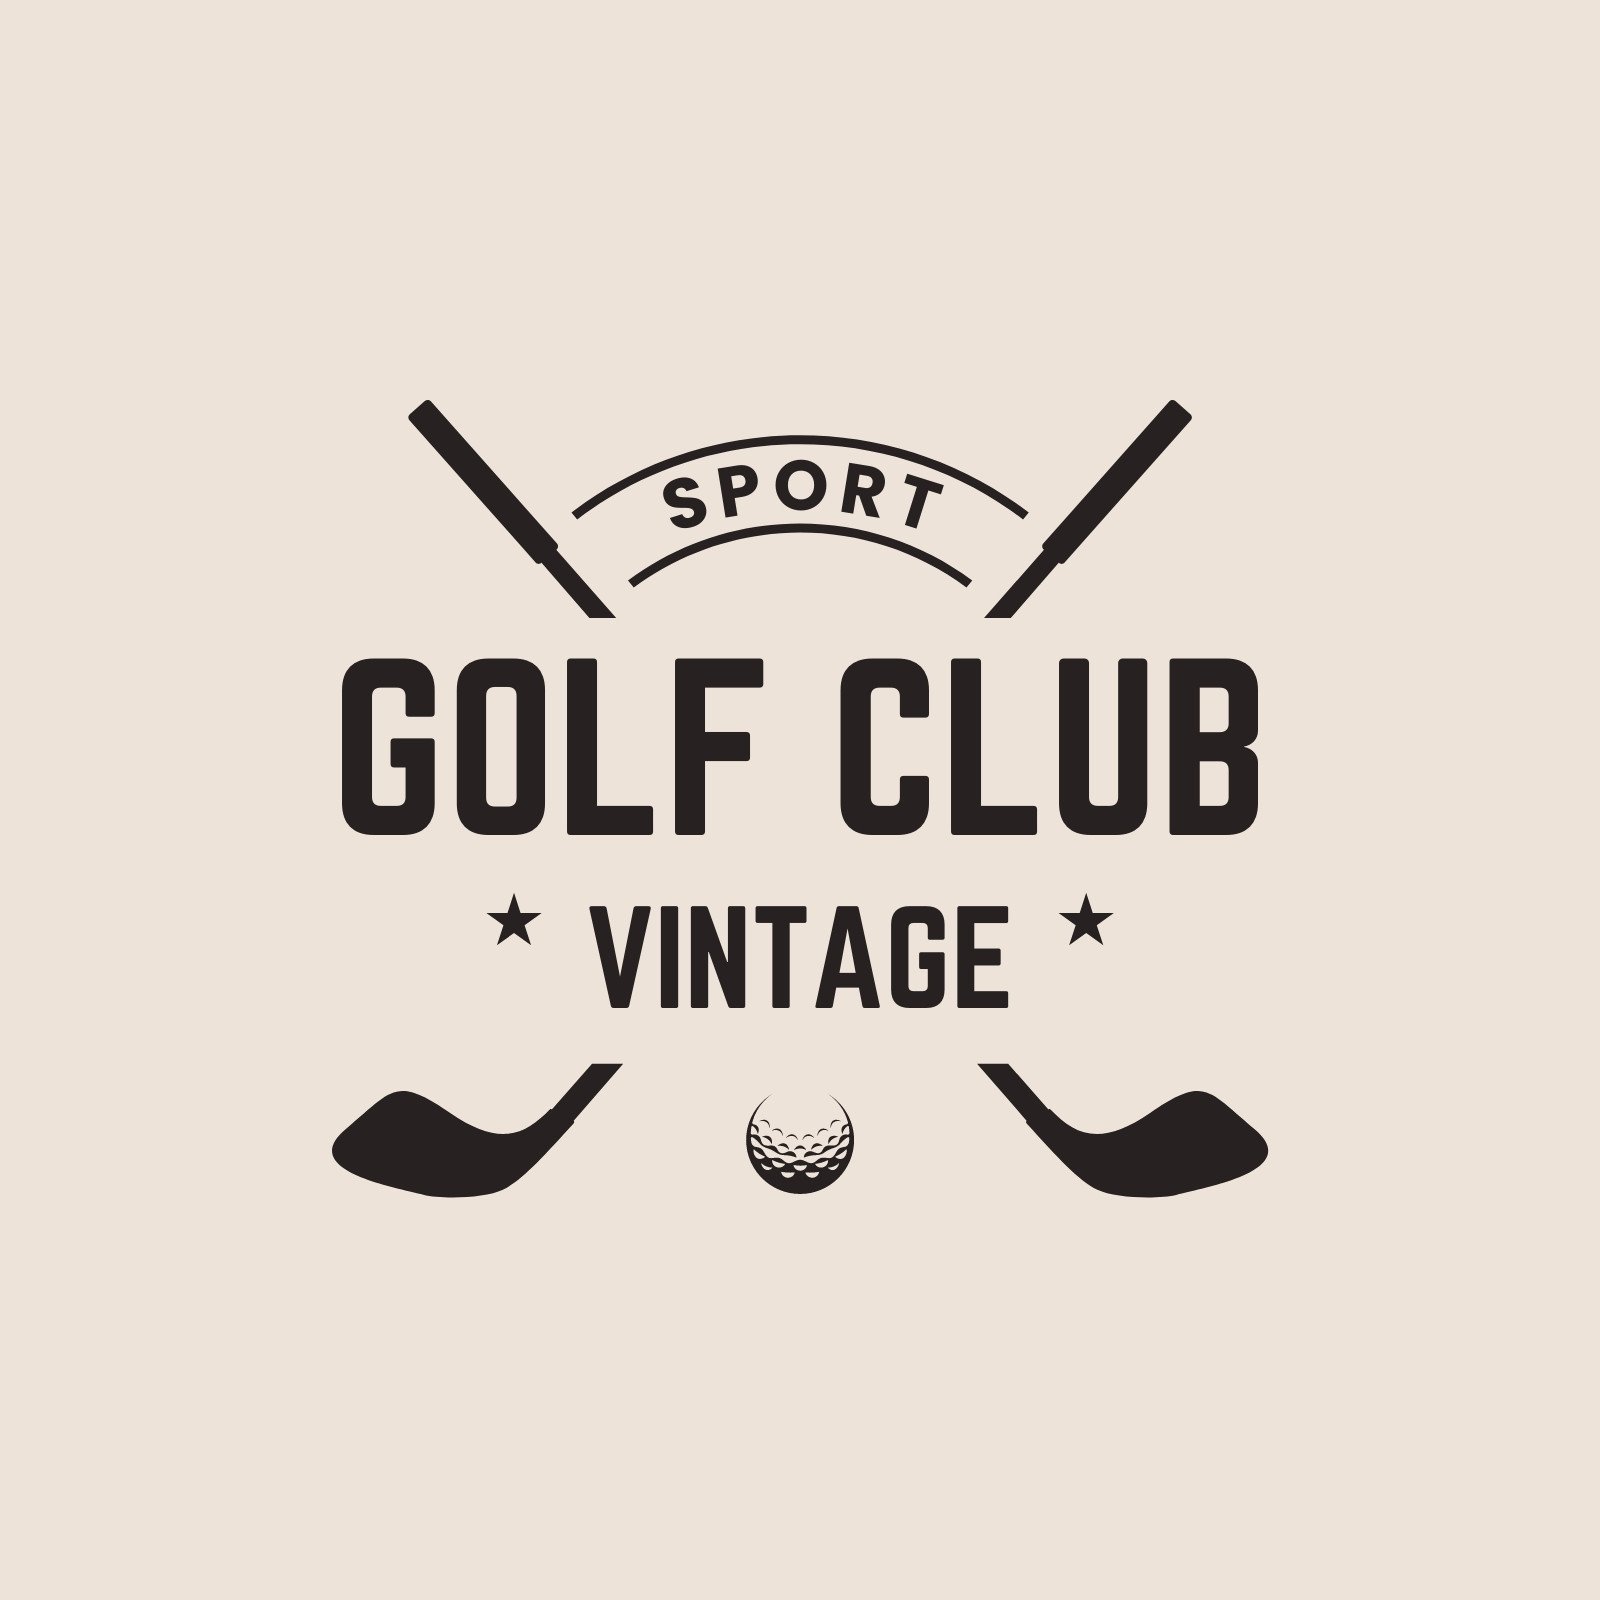 golf tournament logo template